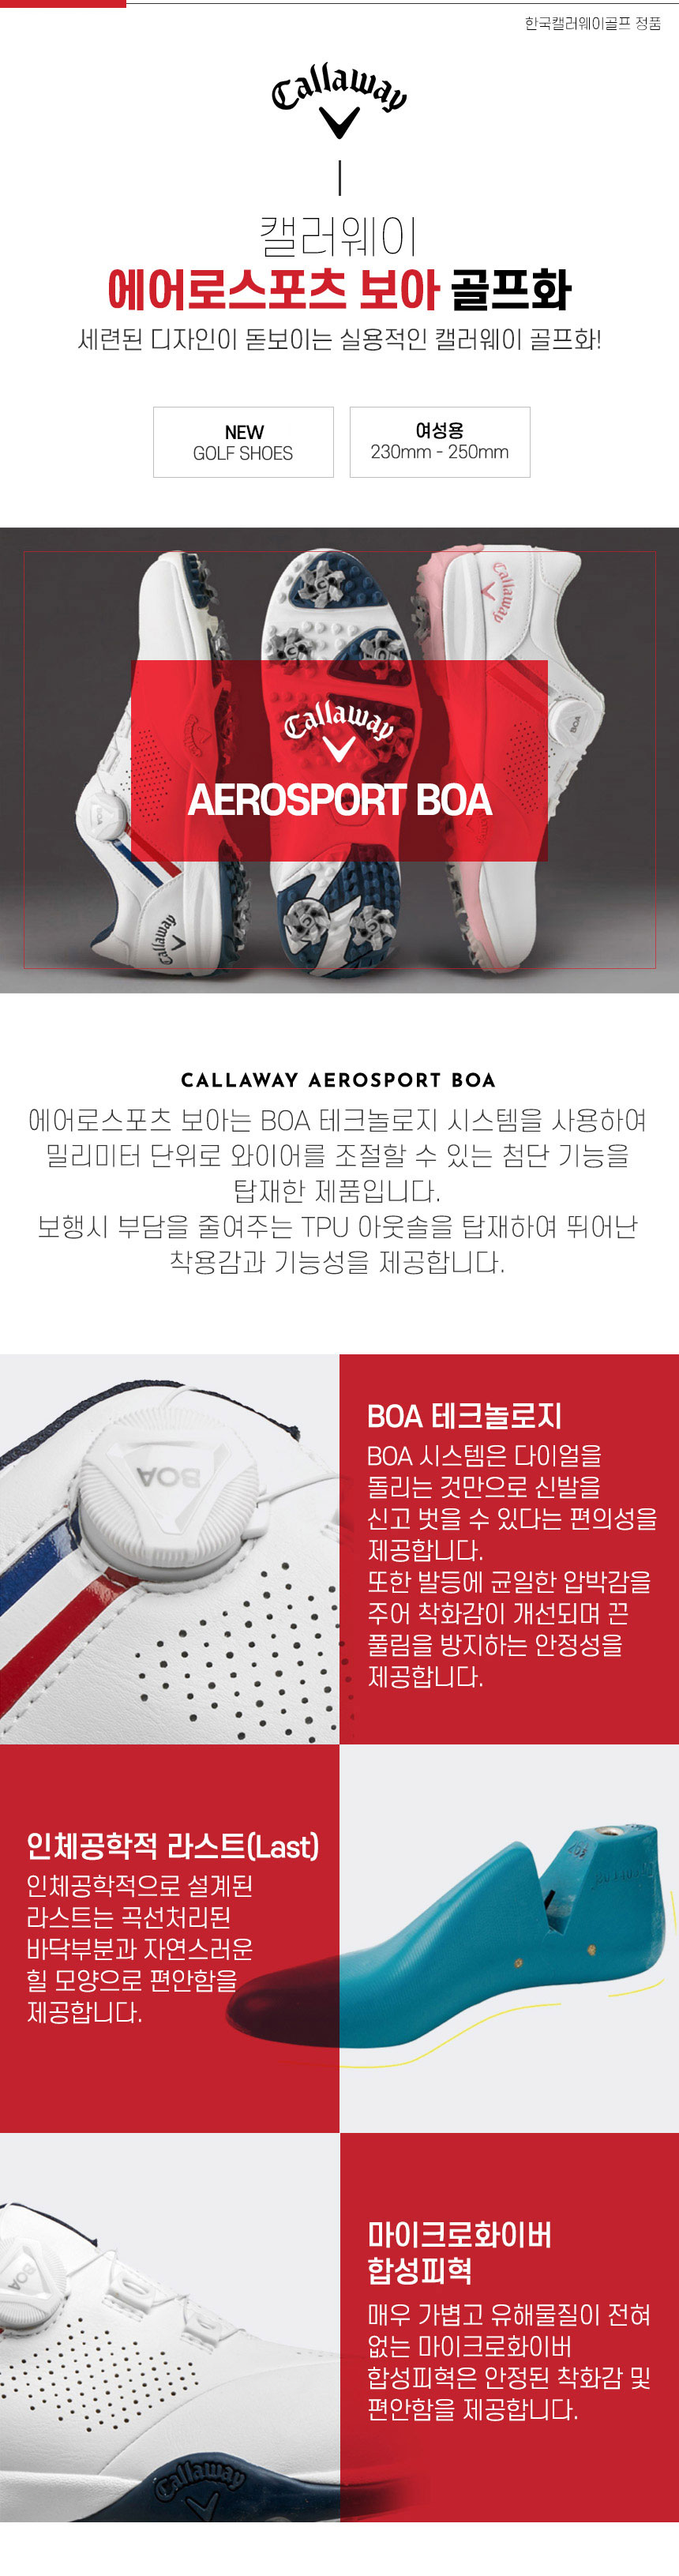 callaway_aero_sports_boa_w_shoes_21.jpg